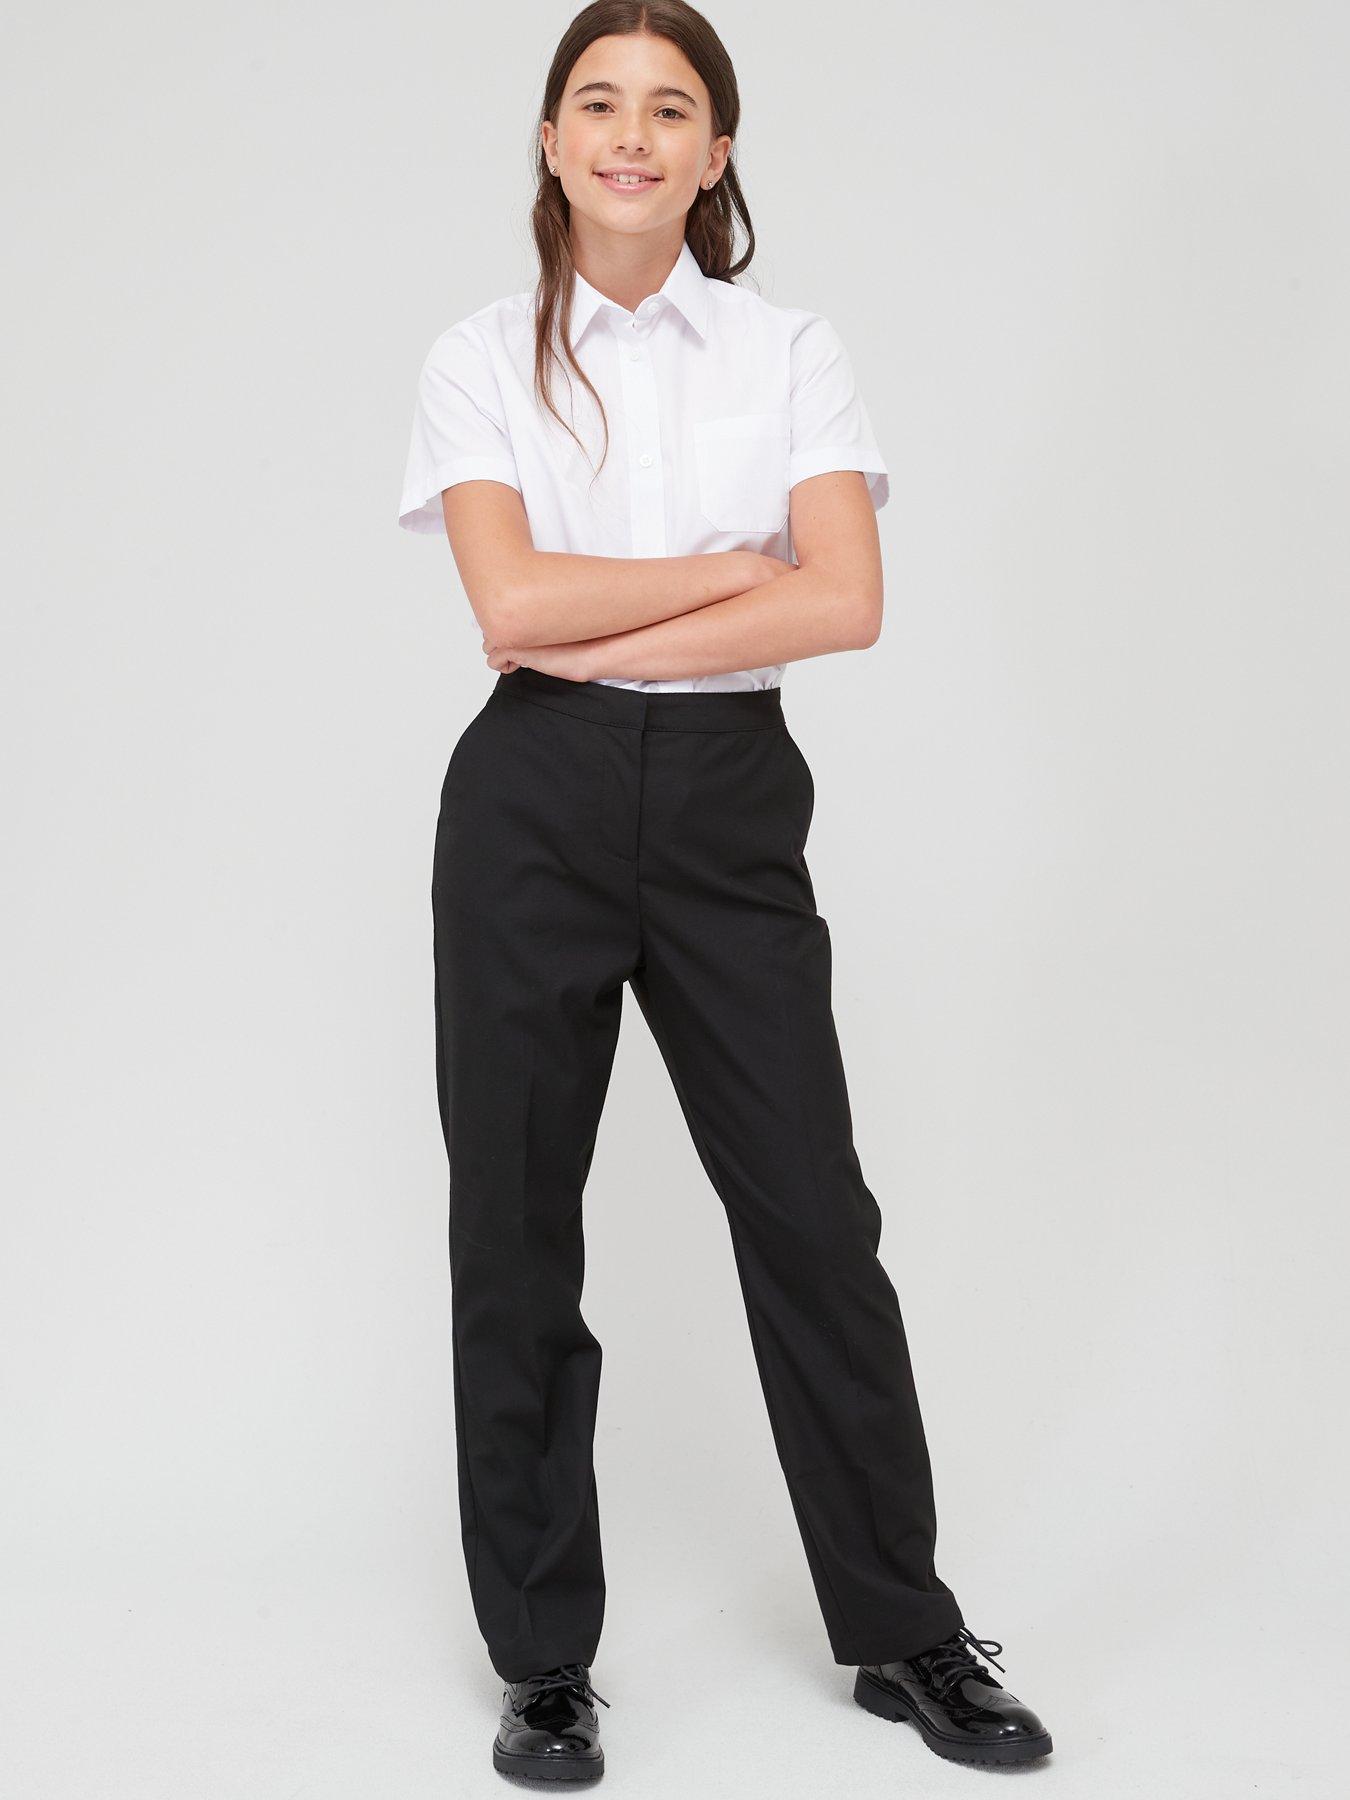 Akiihool School Uniform Pants for Girls Girls Cargo Pants Slim Fit with Zip  Pockets Kids Pants with Pockets Trendy Jogger Trousers (Dark Gray,12-24  Months) - Walmart.com